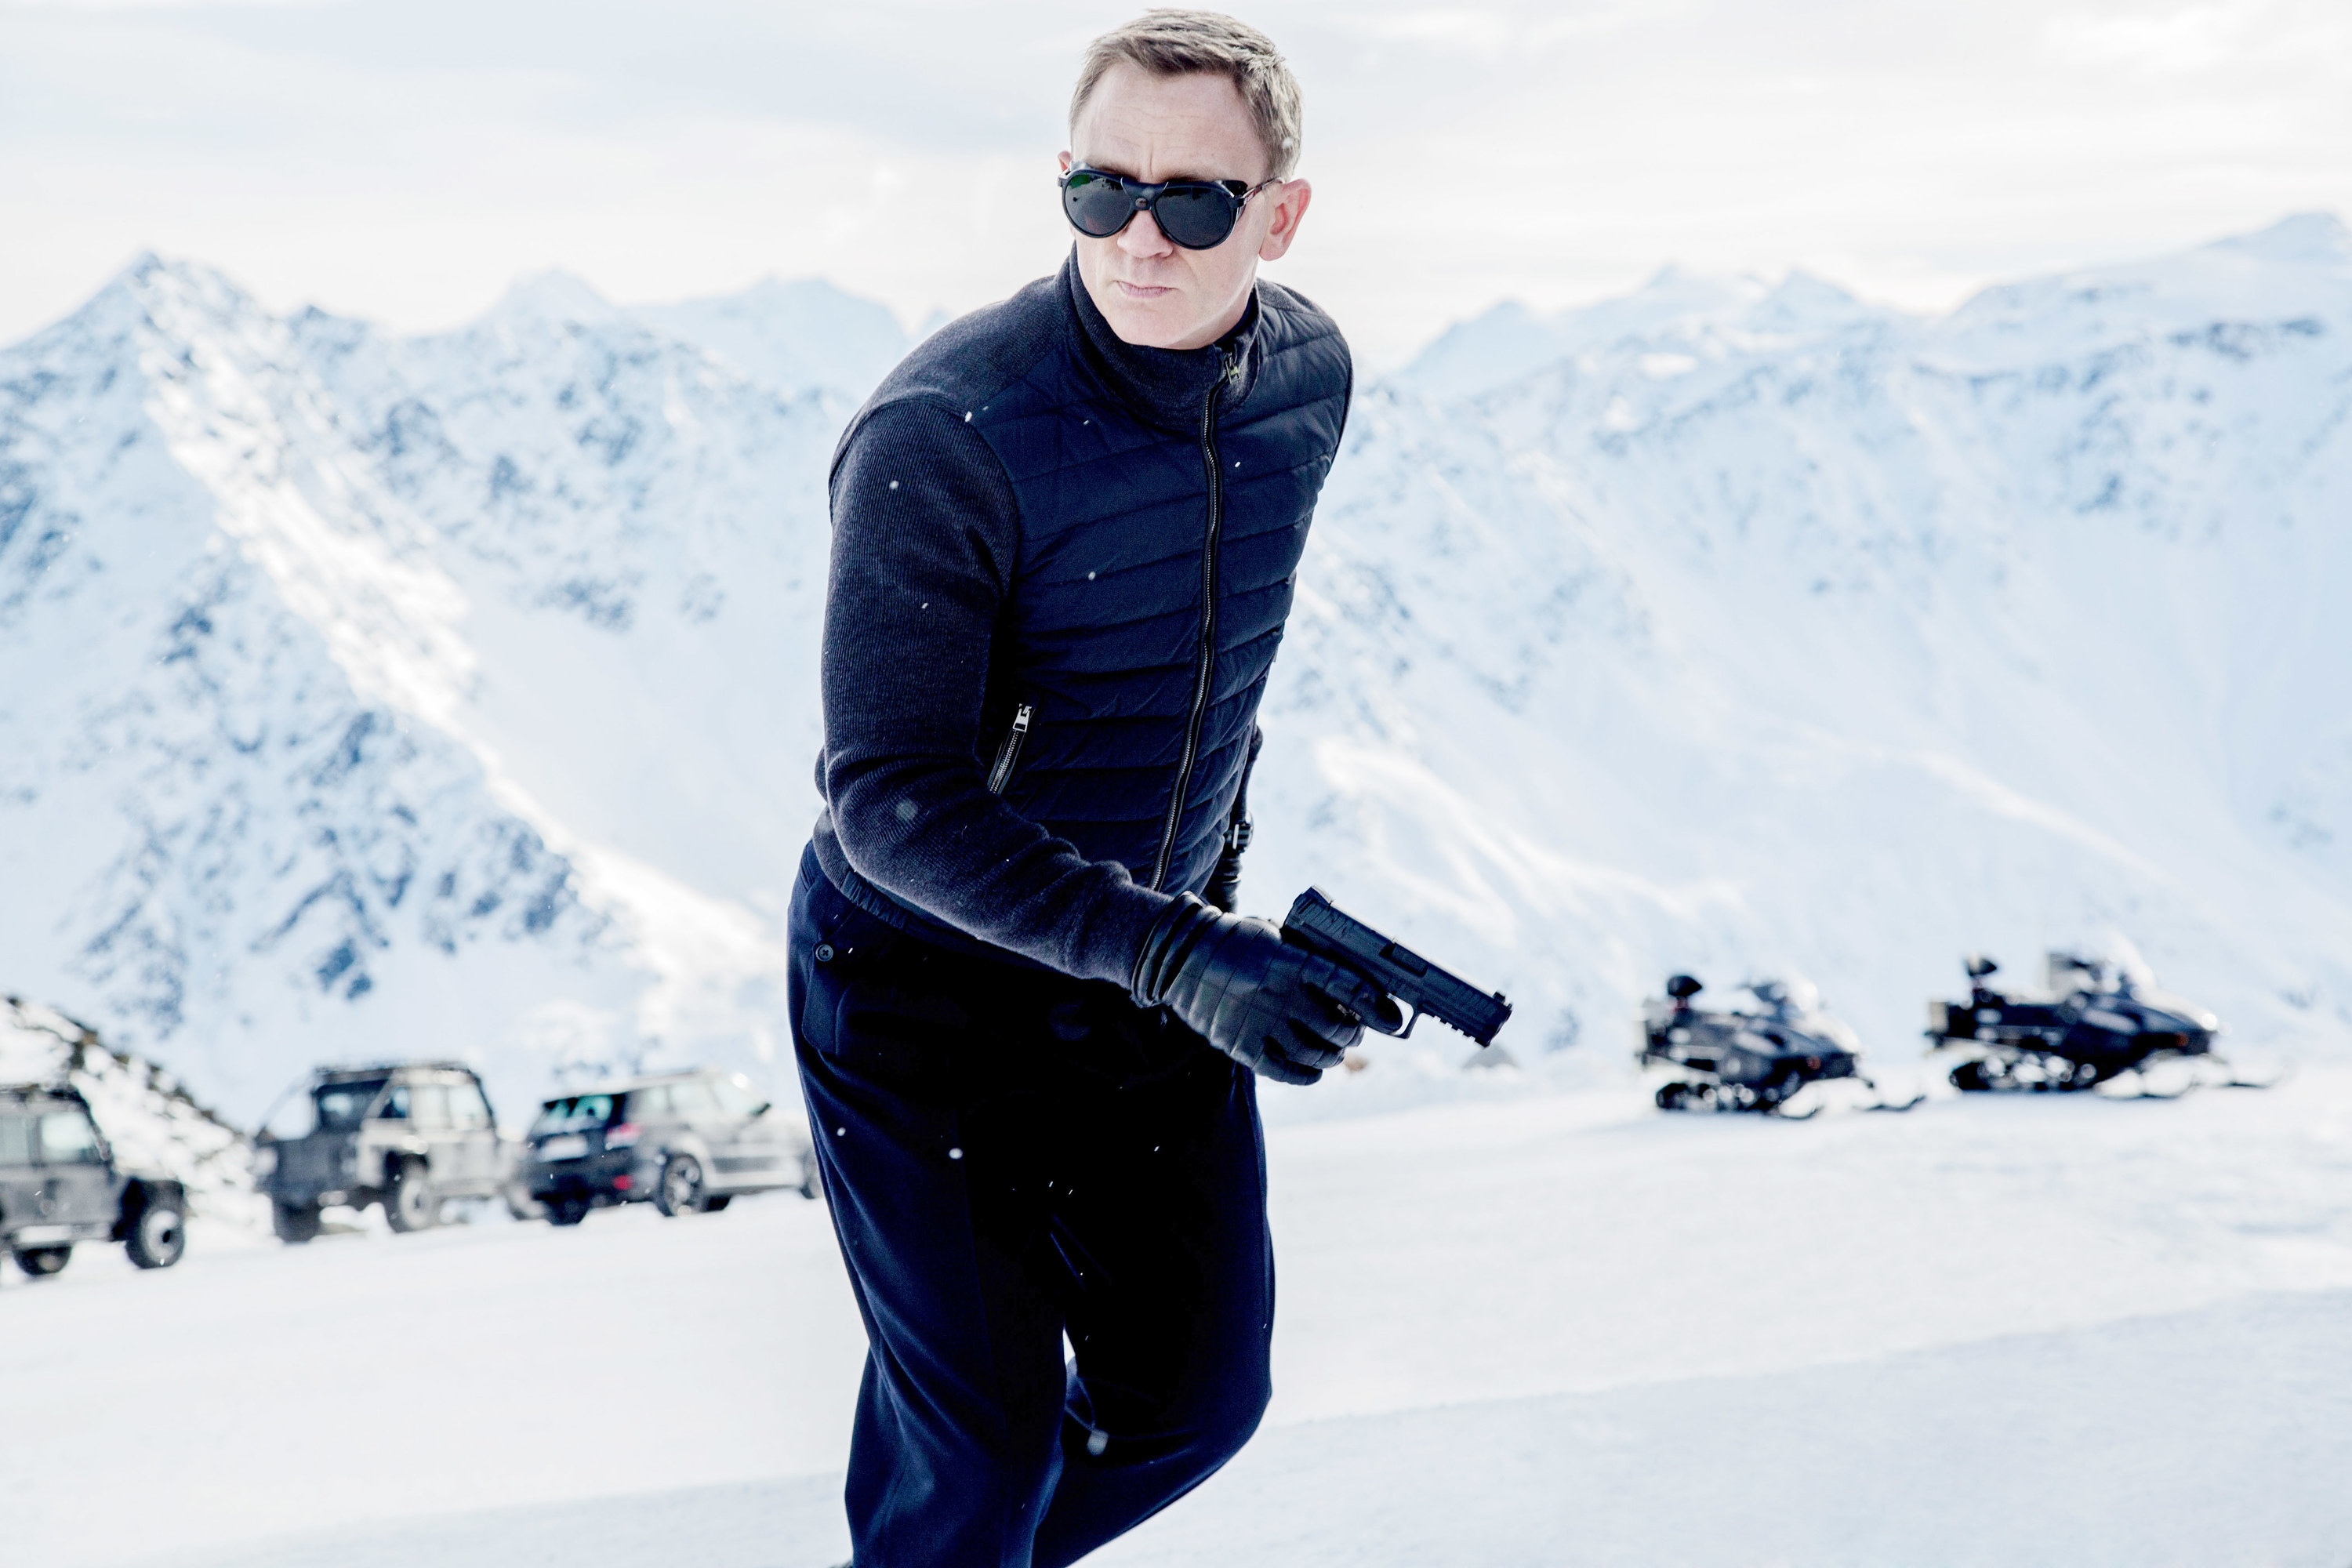 A man in a snowy landscape running with a gun